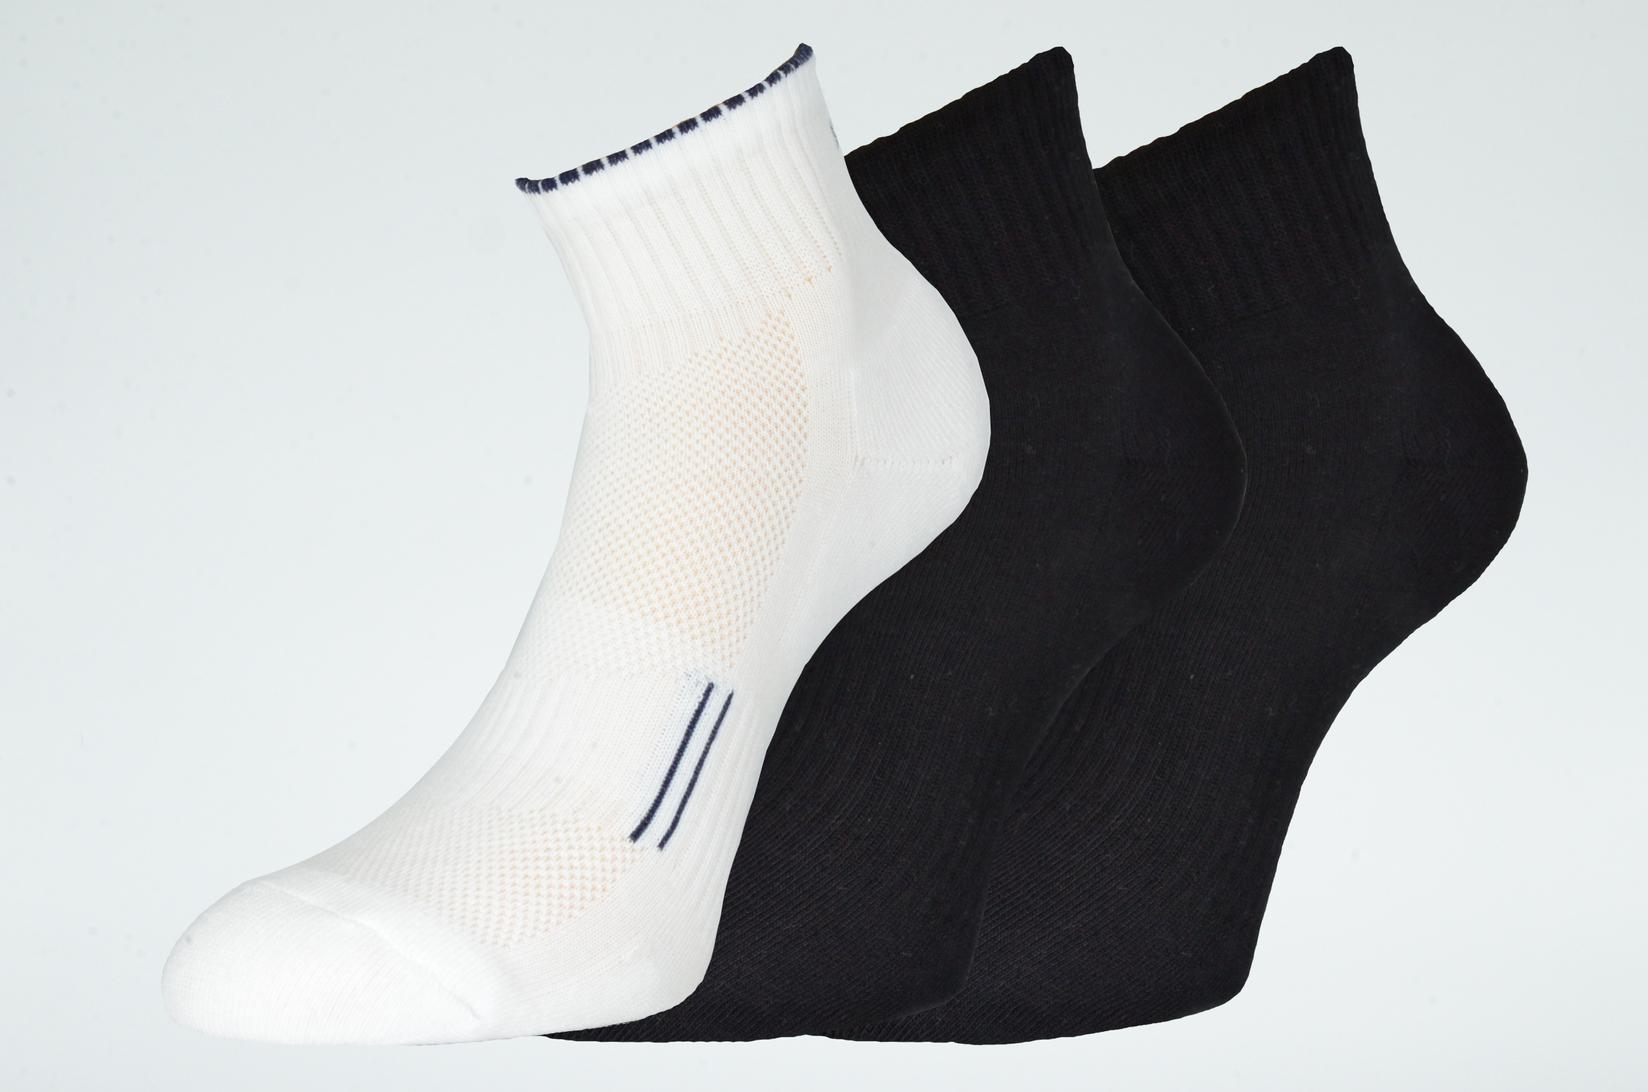 GERBI Sportske čarape Athletic 3/1 art.251 39-41 M3 crne i bele